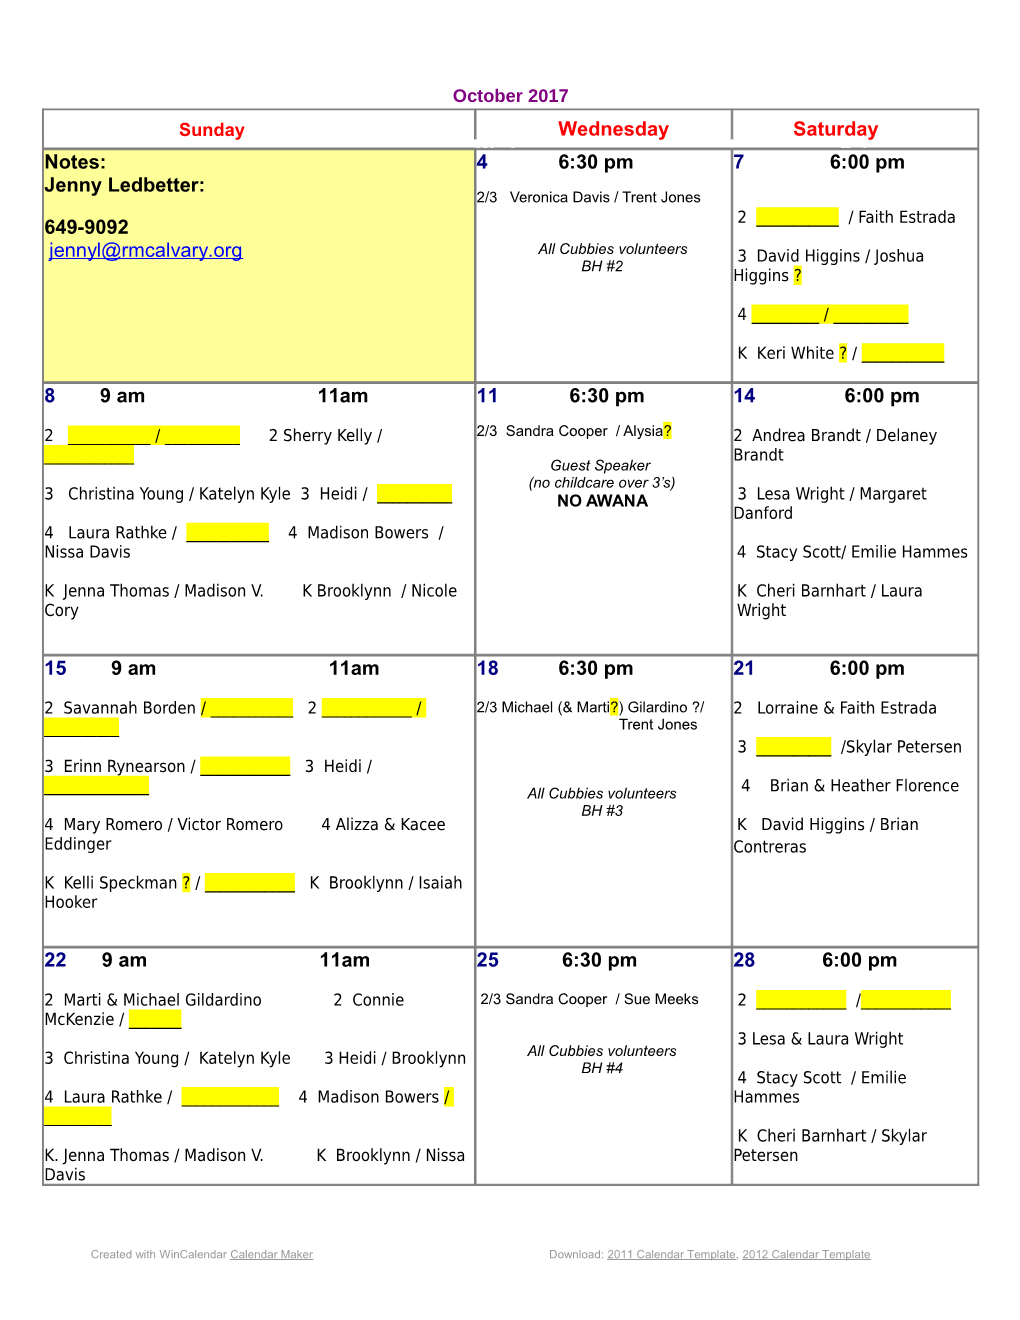 Created with Wincalendar Calendar Maker Download: 2011 Calendar Template, 2012 Calendar Template s1